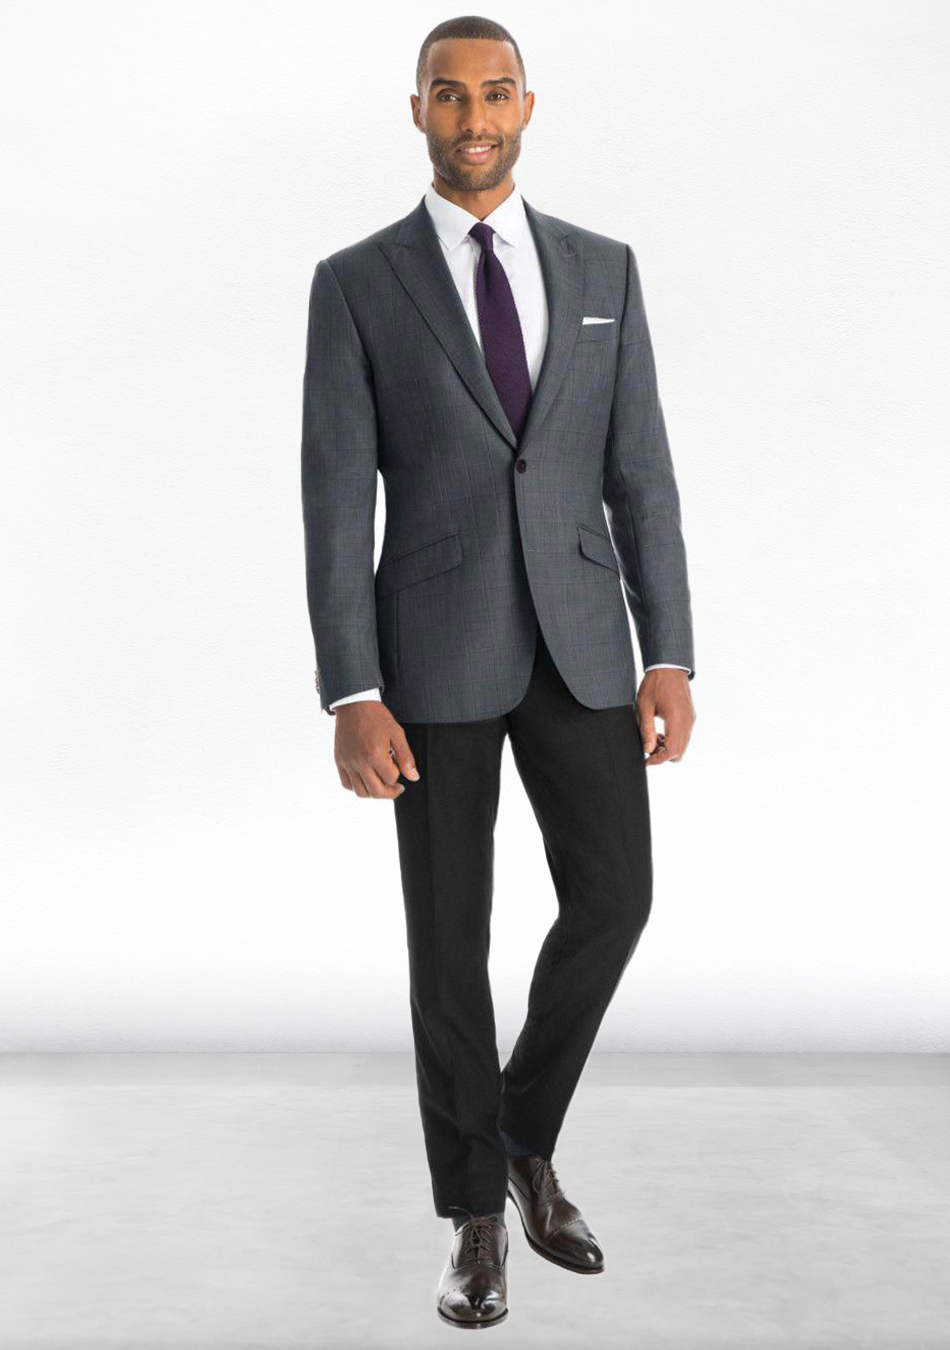 Charcoal grey blazer, white dress shirt, violet tie, black dress pants, and dark brown Oxford shoes